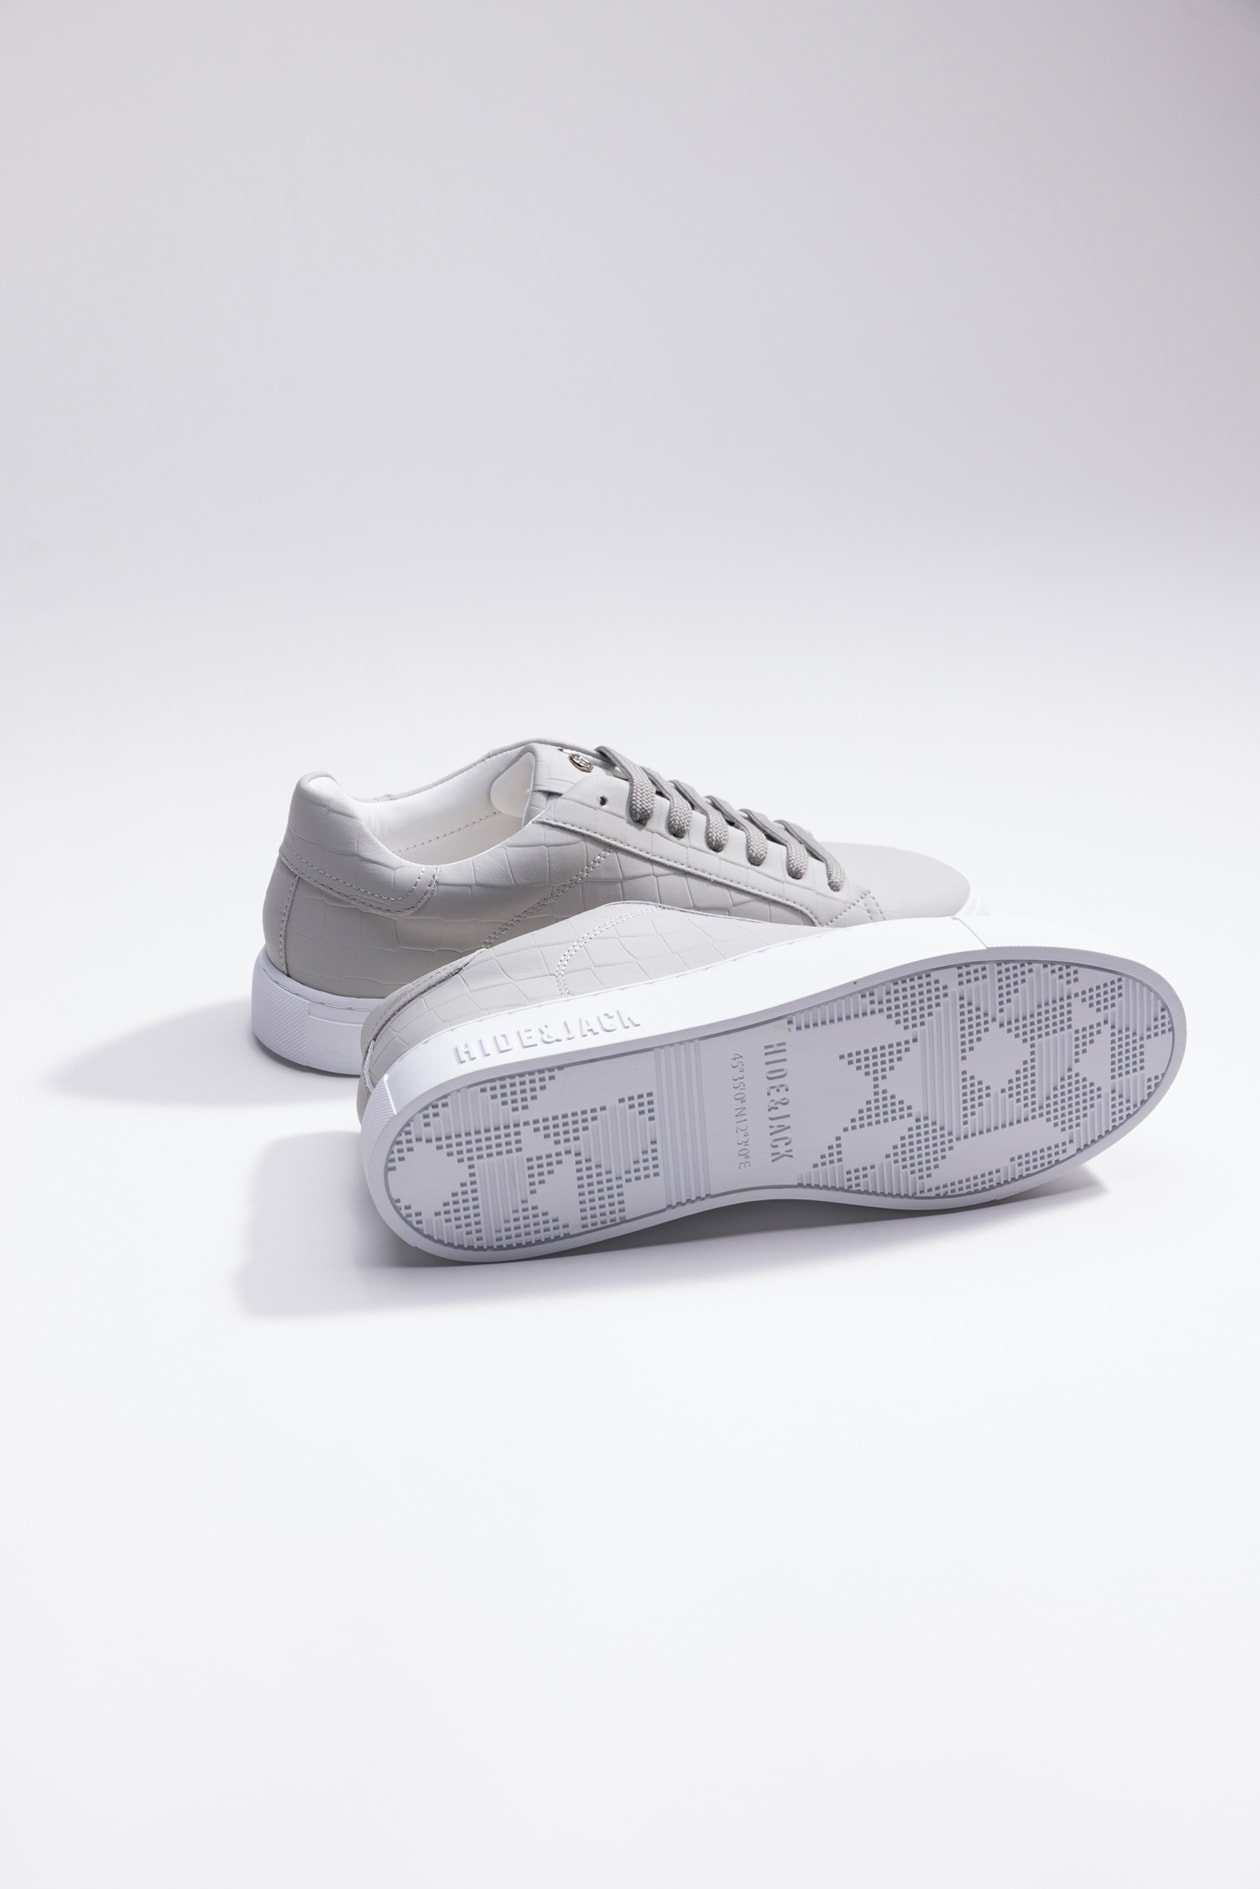 Hide & Jack Low Top Sneaker - Essence Grey White